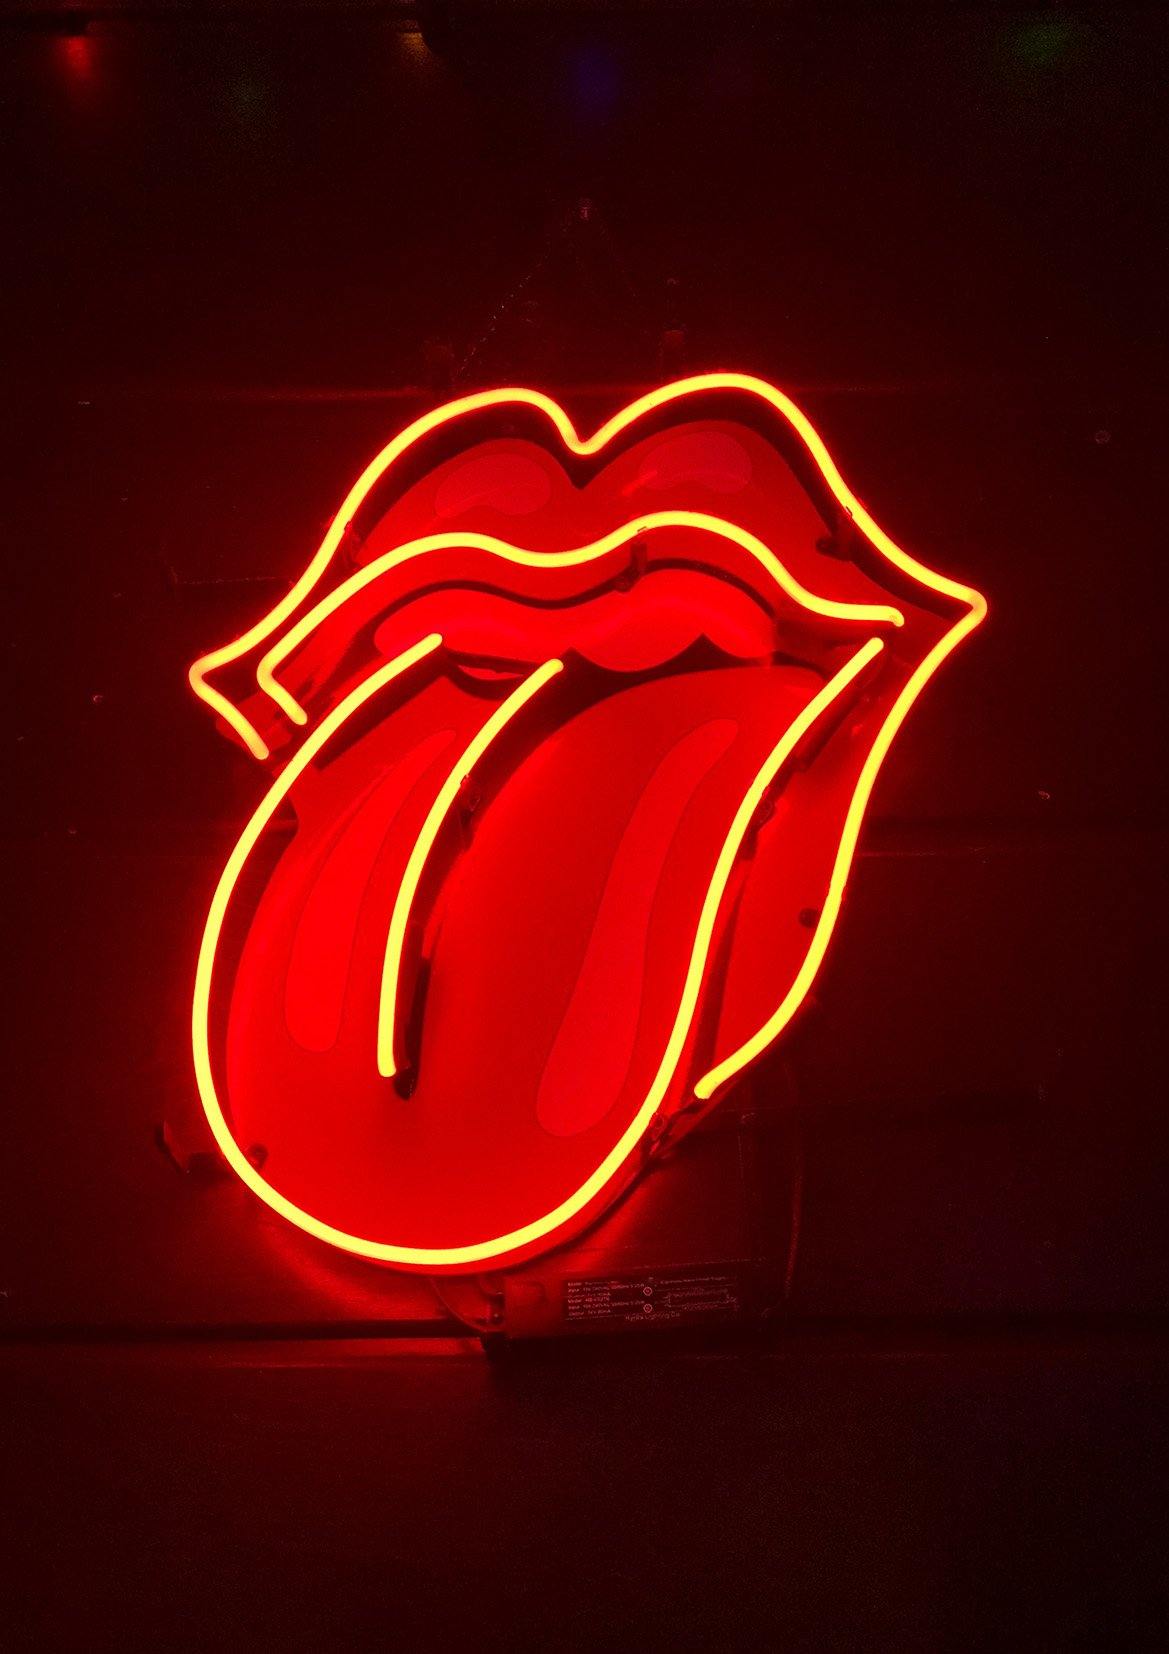 Lips print rolling stones tongue logo neon wall art â pimli prints